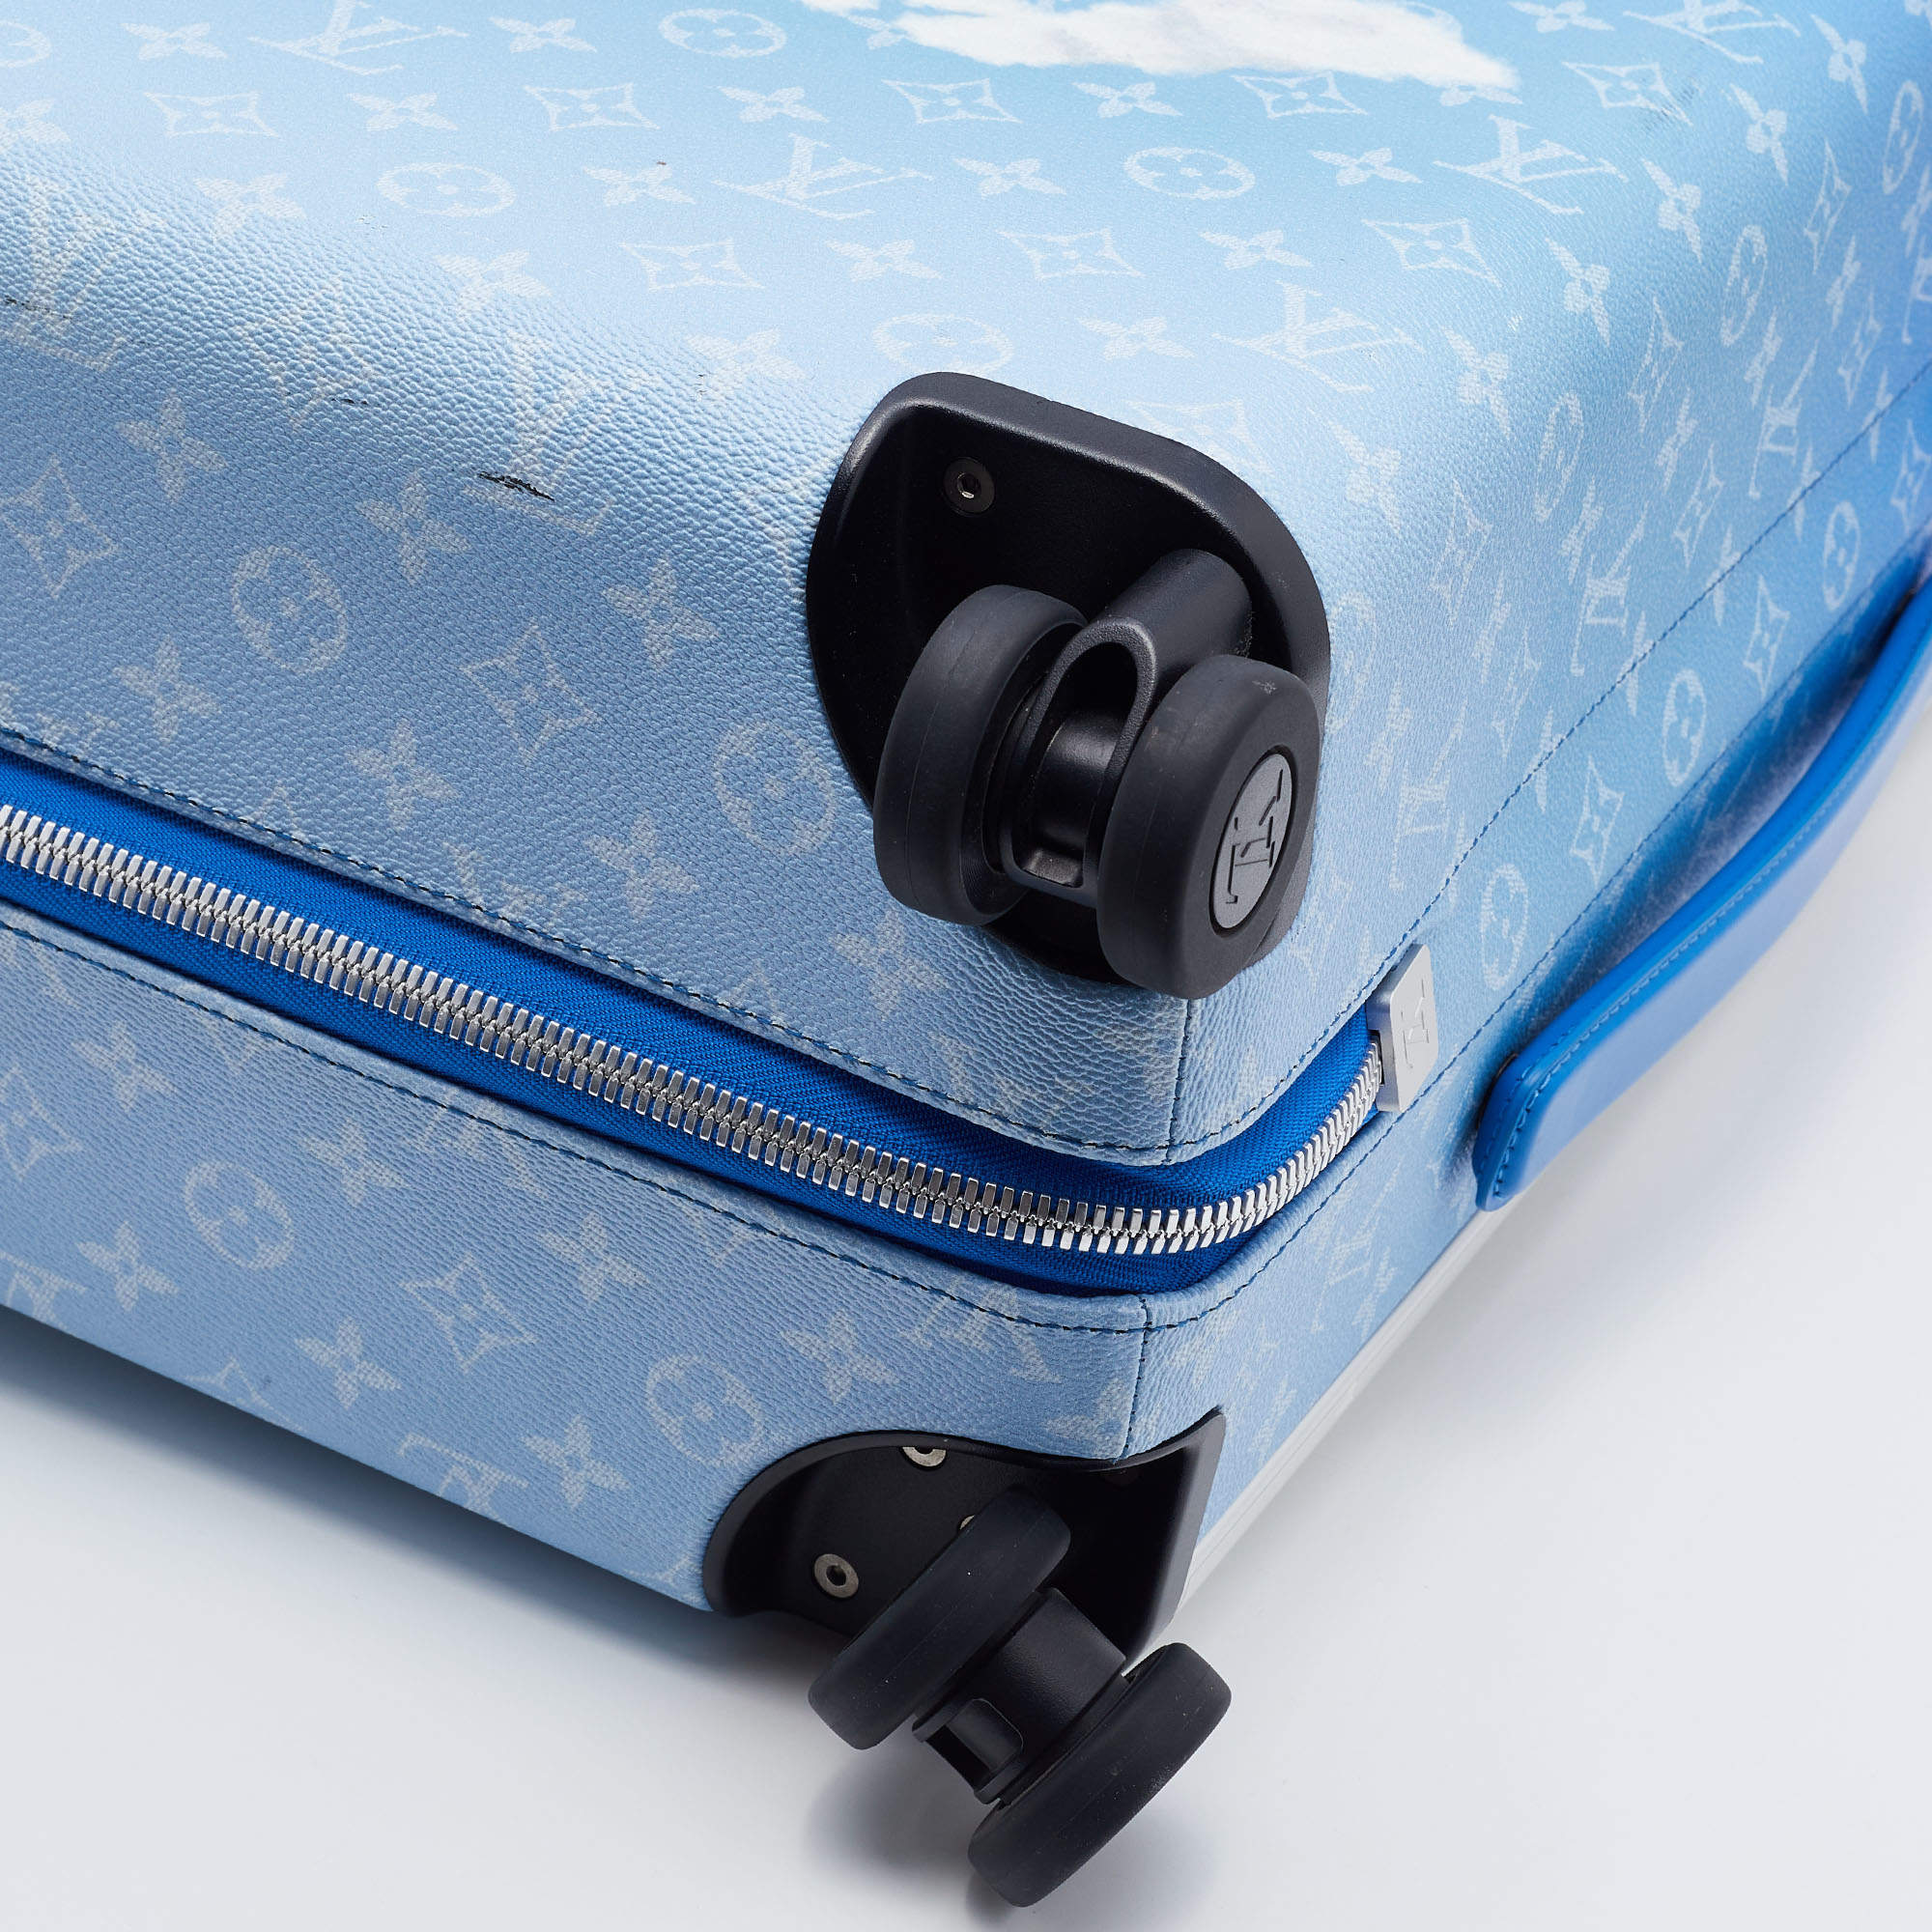 Horizon 55 Suitcase - Luxury Taigarama Blue